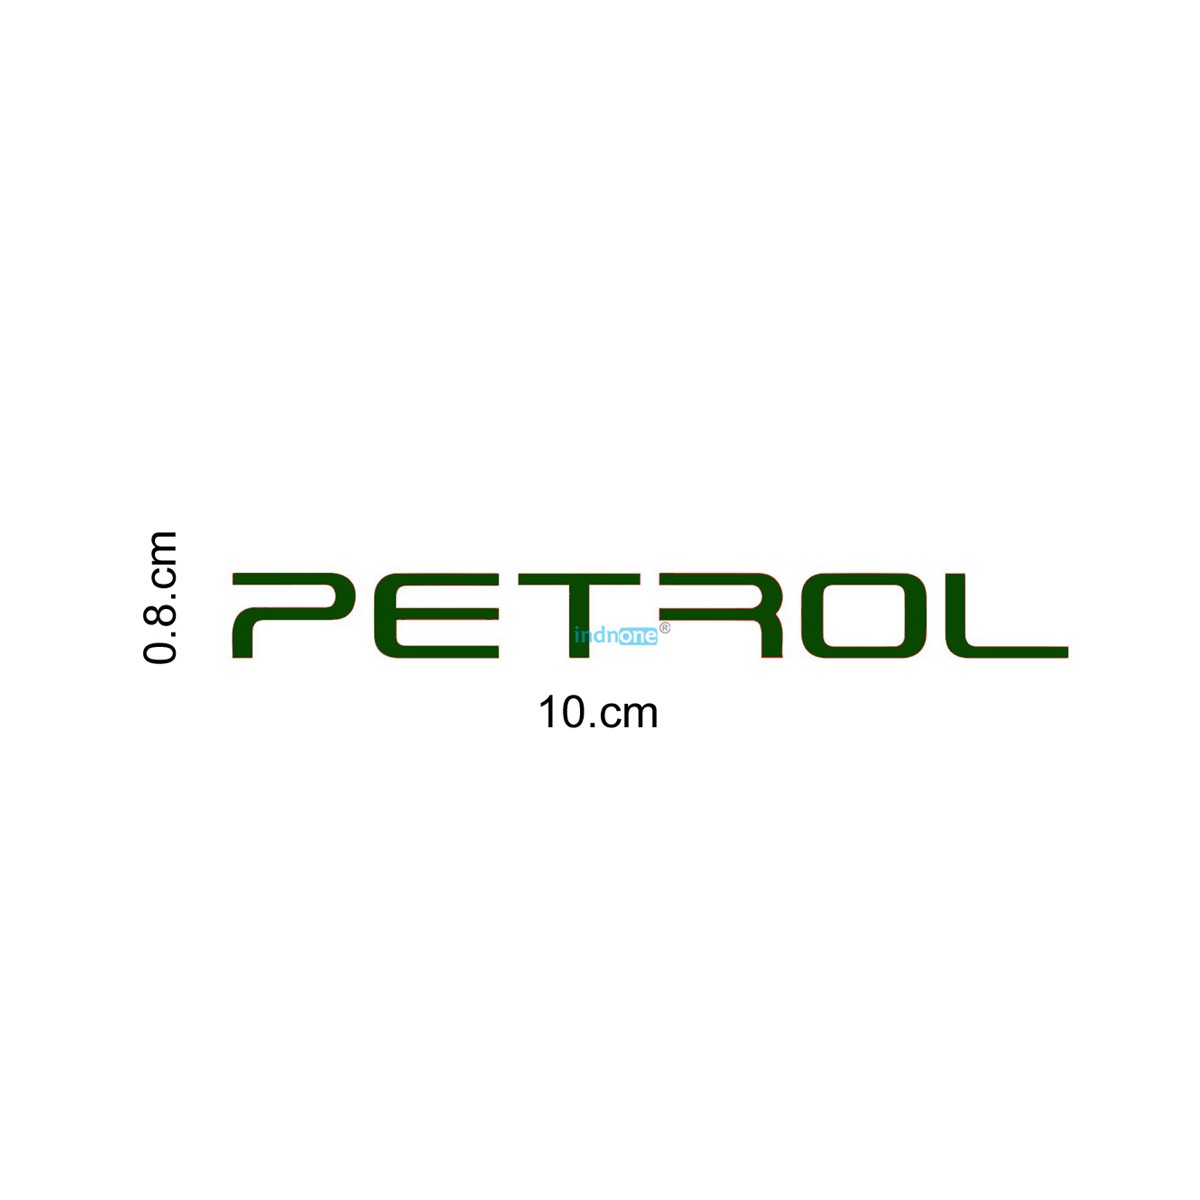 indnone® Cute Green Petrol Sticker for Car Waterproof PVC Vinyl Decal Sticker | Green Color Standard Size